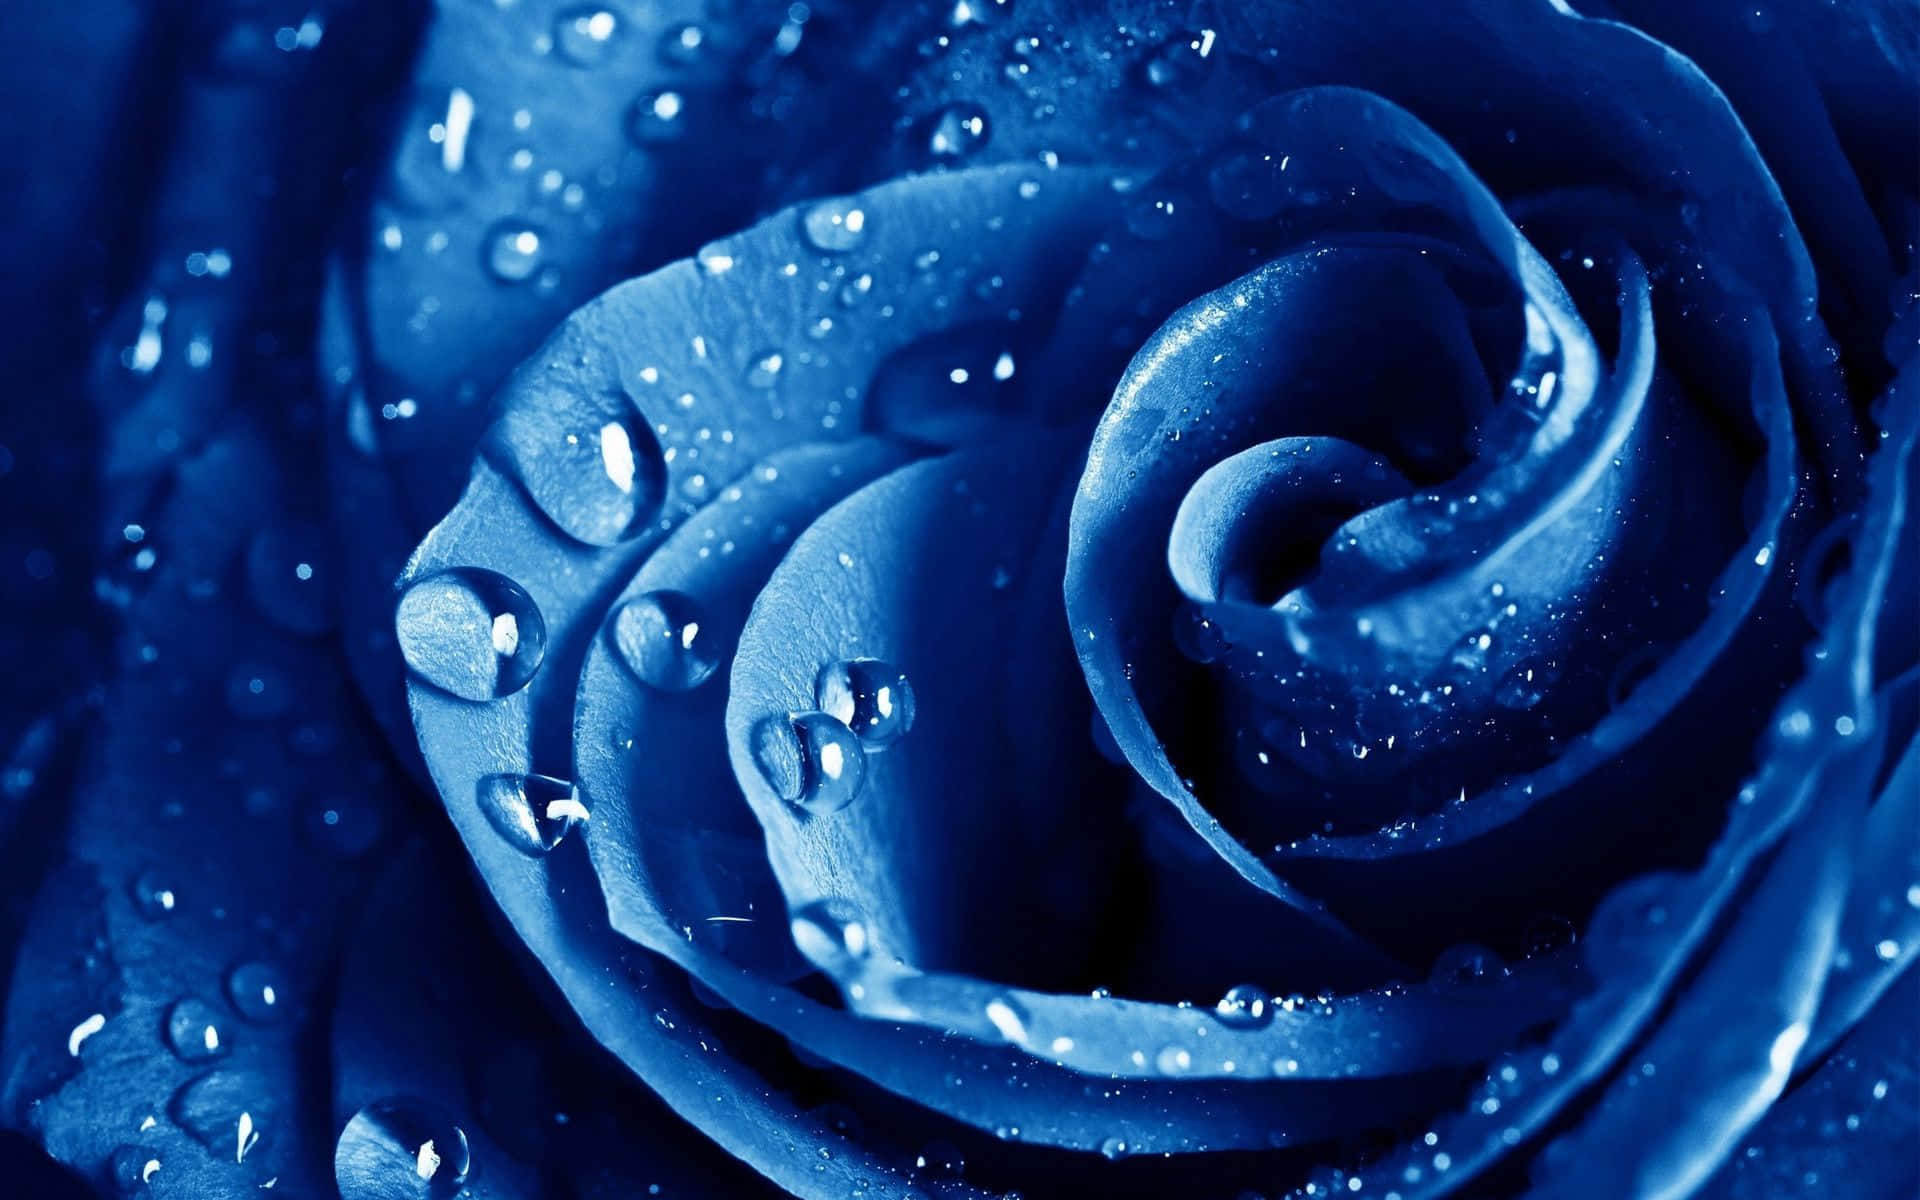 A Beautiful Blue Rose Set Against A Crisp White Background